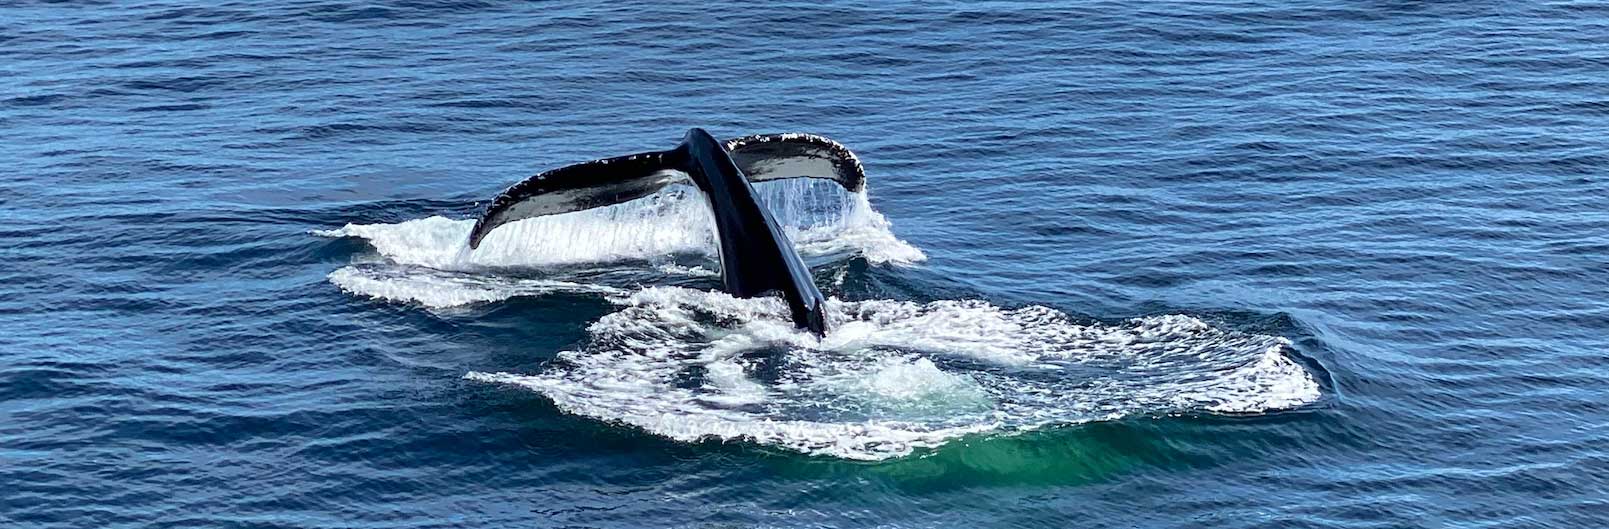 Хвост кита, спускающийся под воду. 